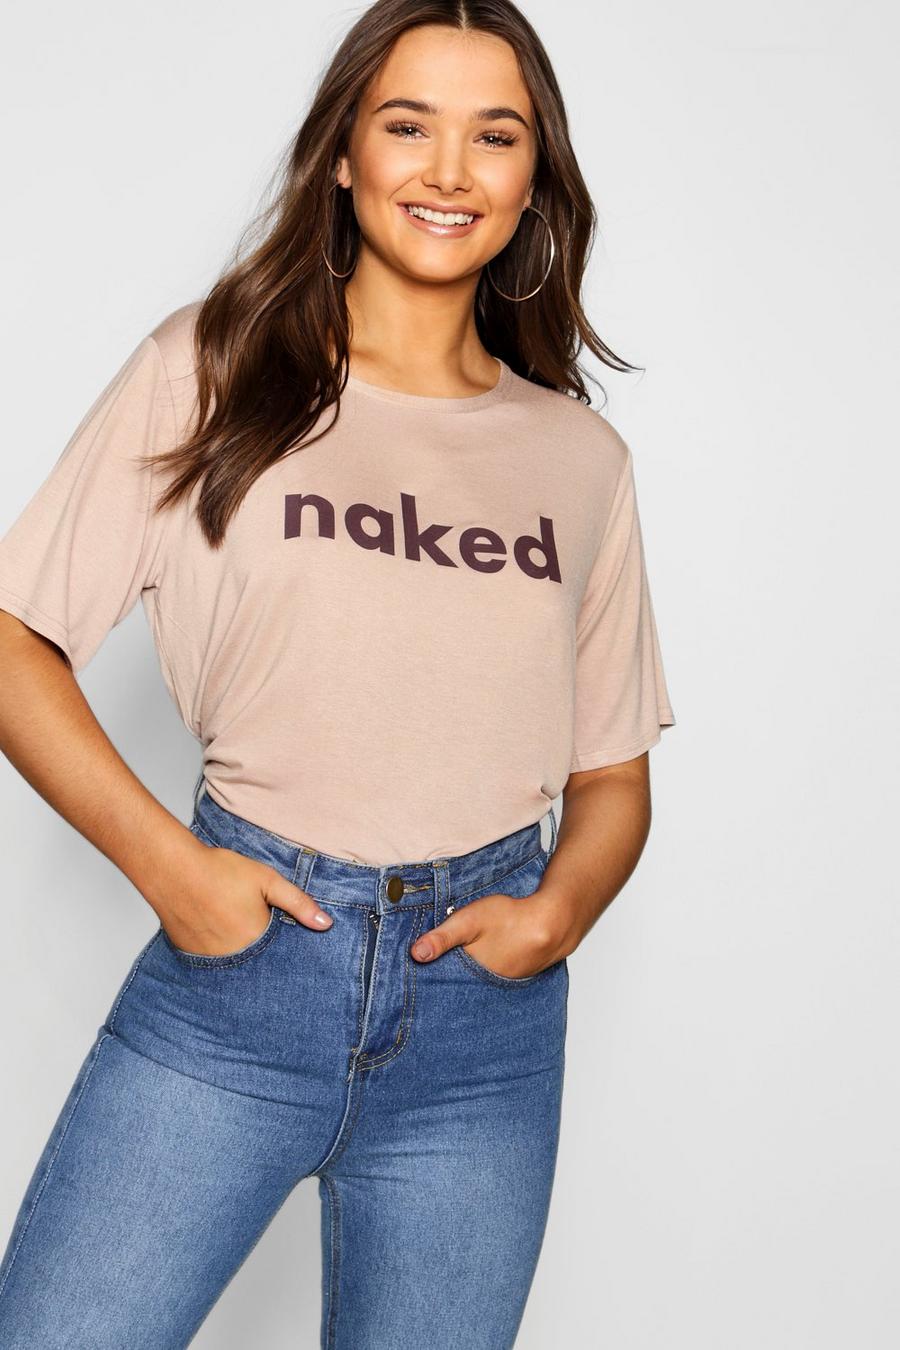 Naked Slogan T-Shirt image number 1